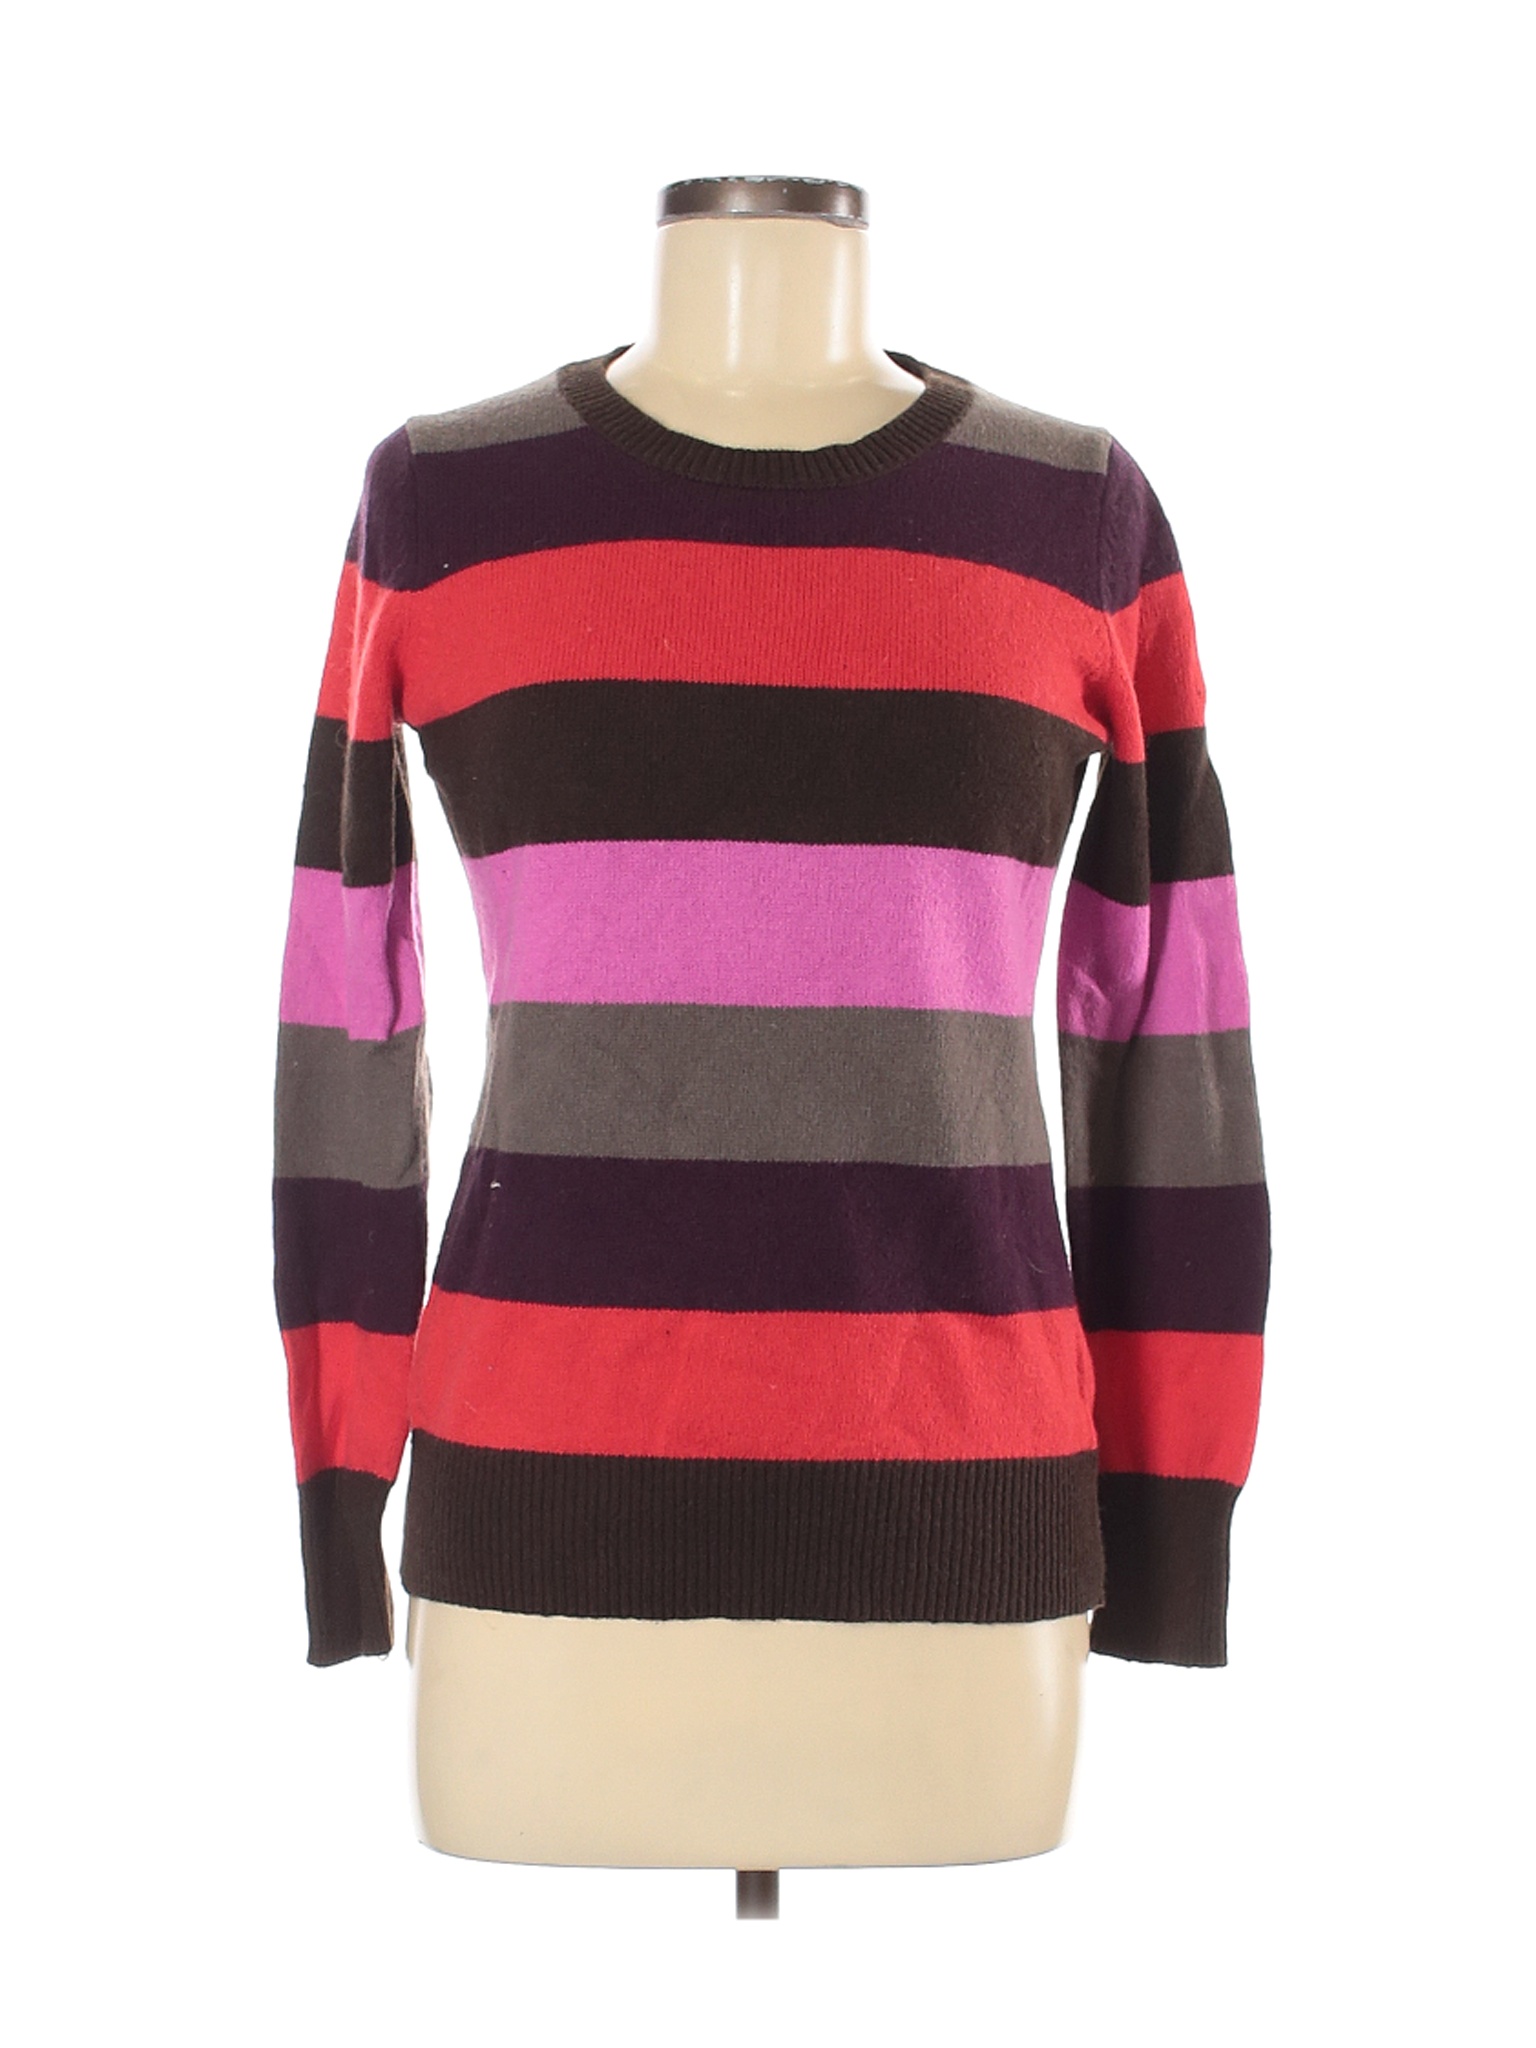 Old Navy Women Pink Pullover Sweater M | eBay